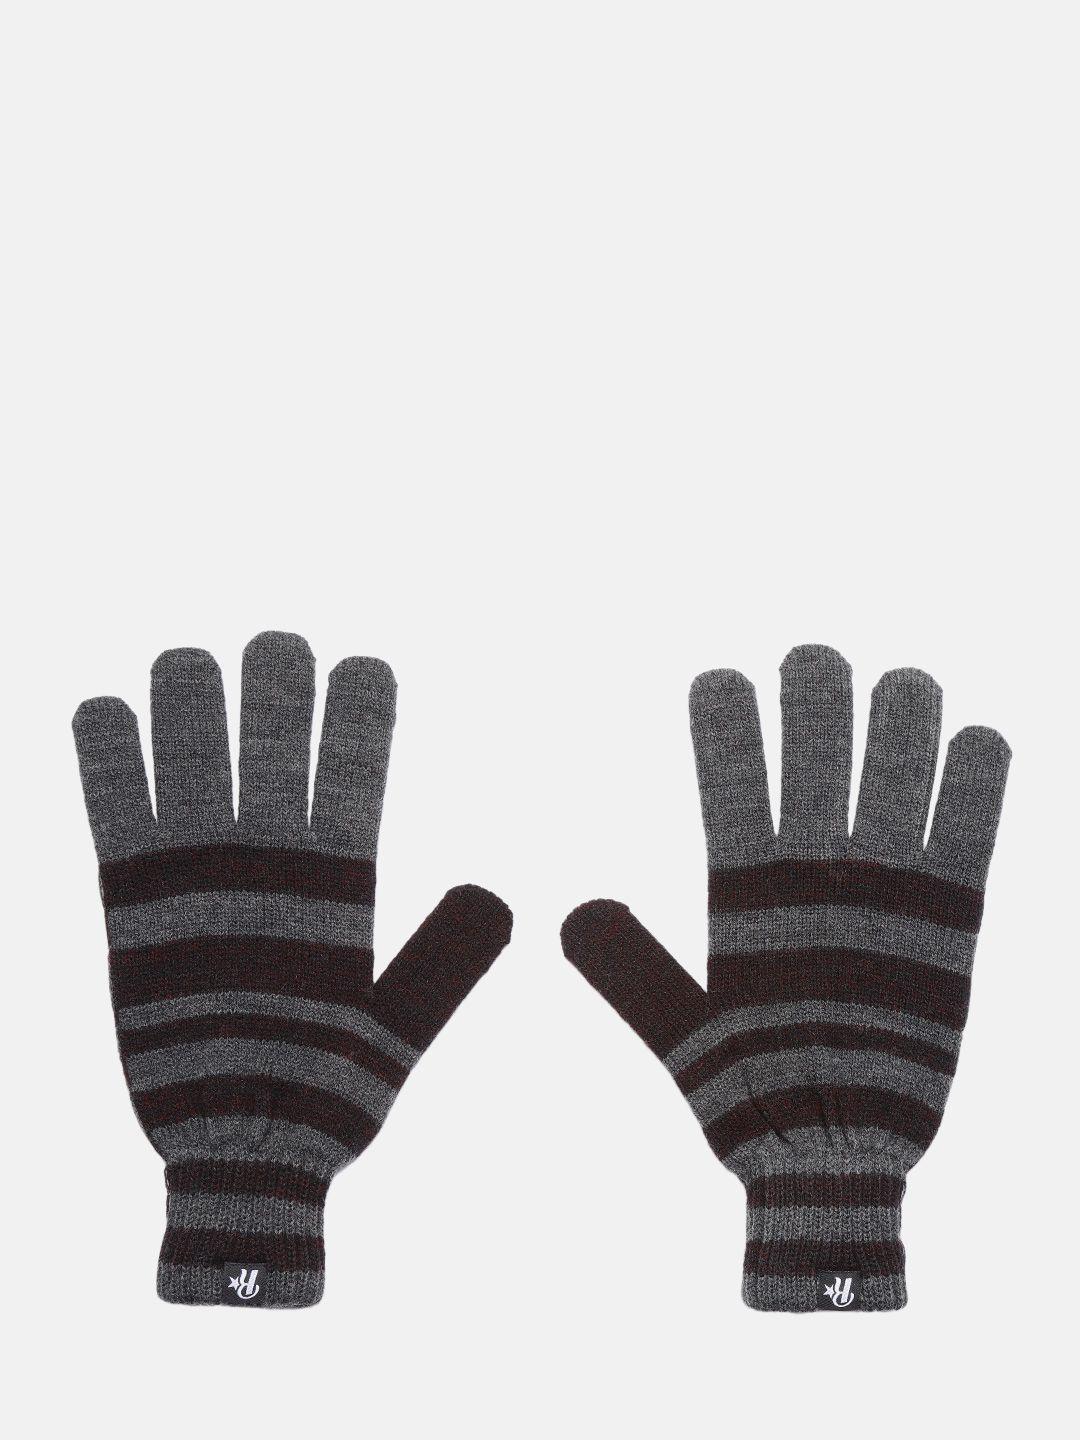 roadster men grey & black striped winter hand gloves